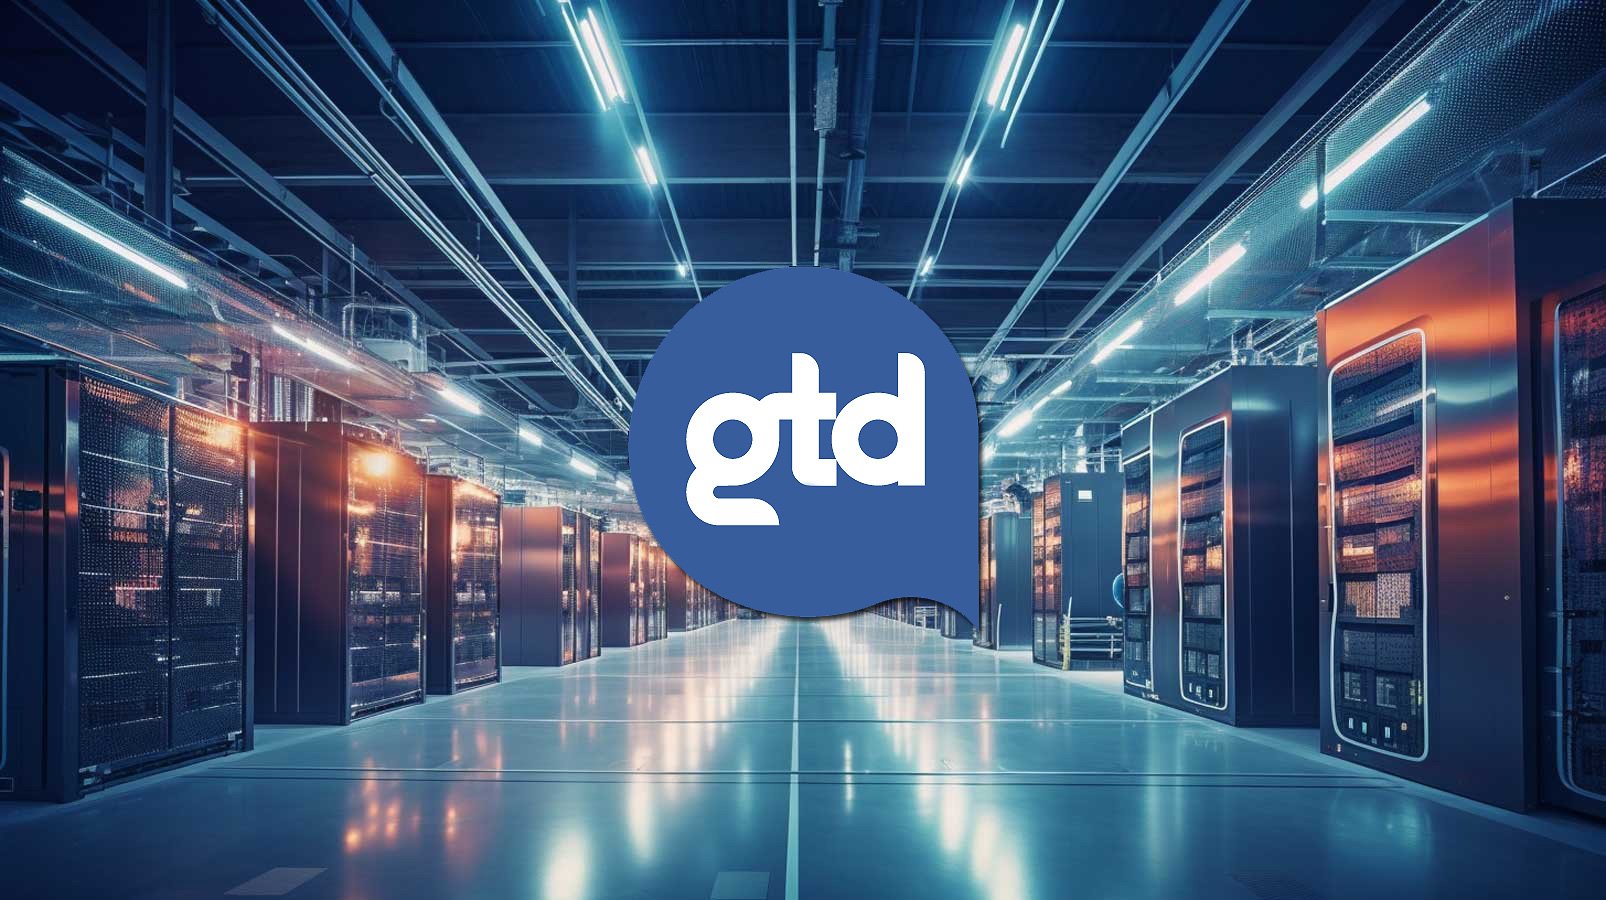 GTD logo over a data center